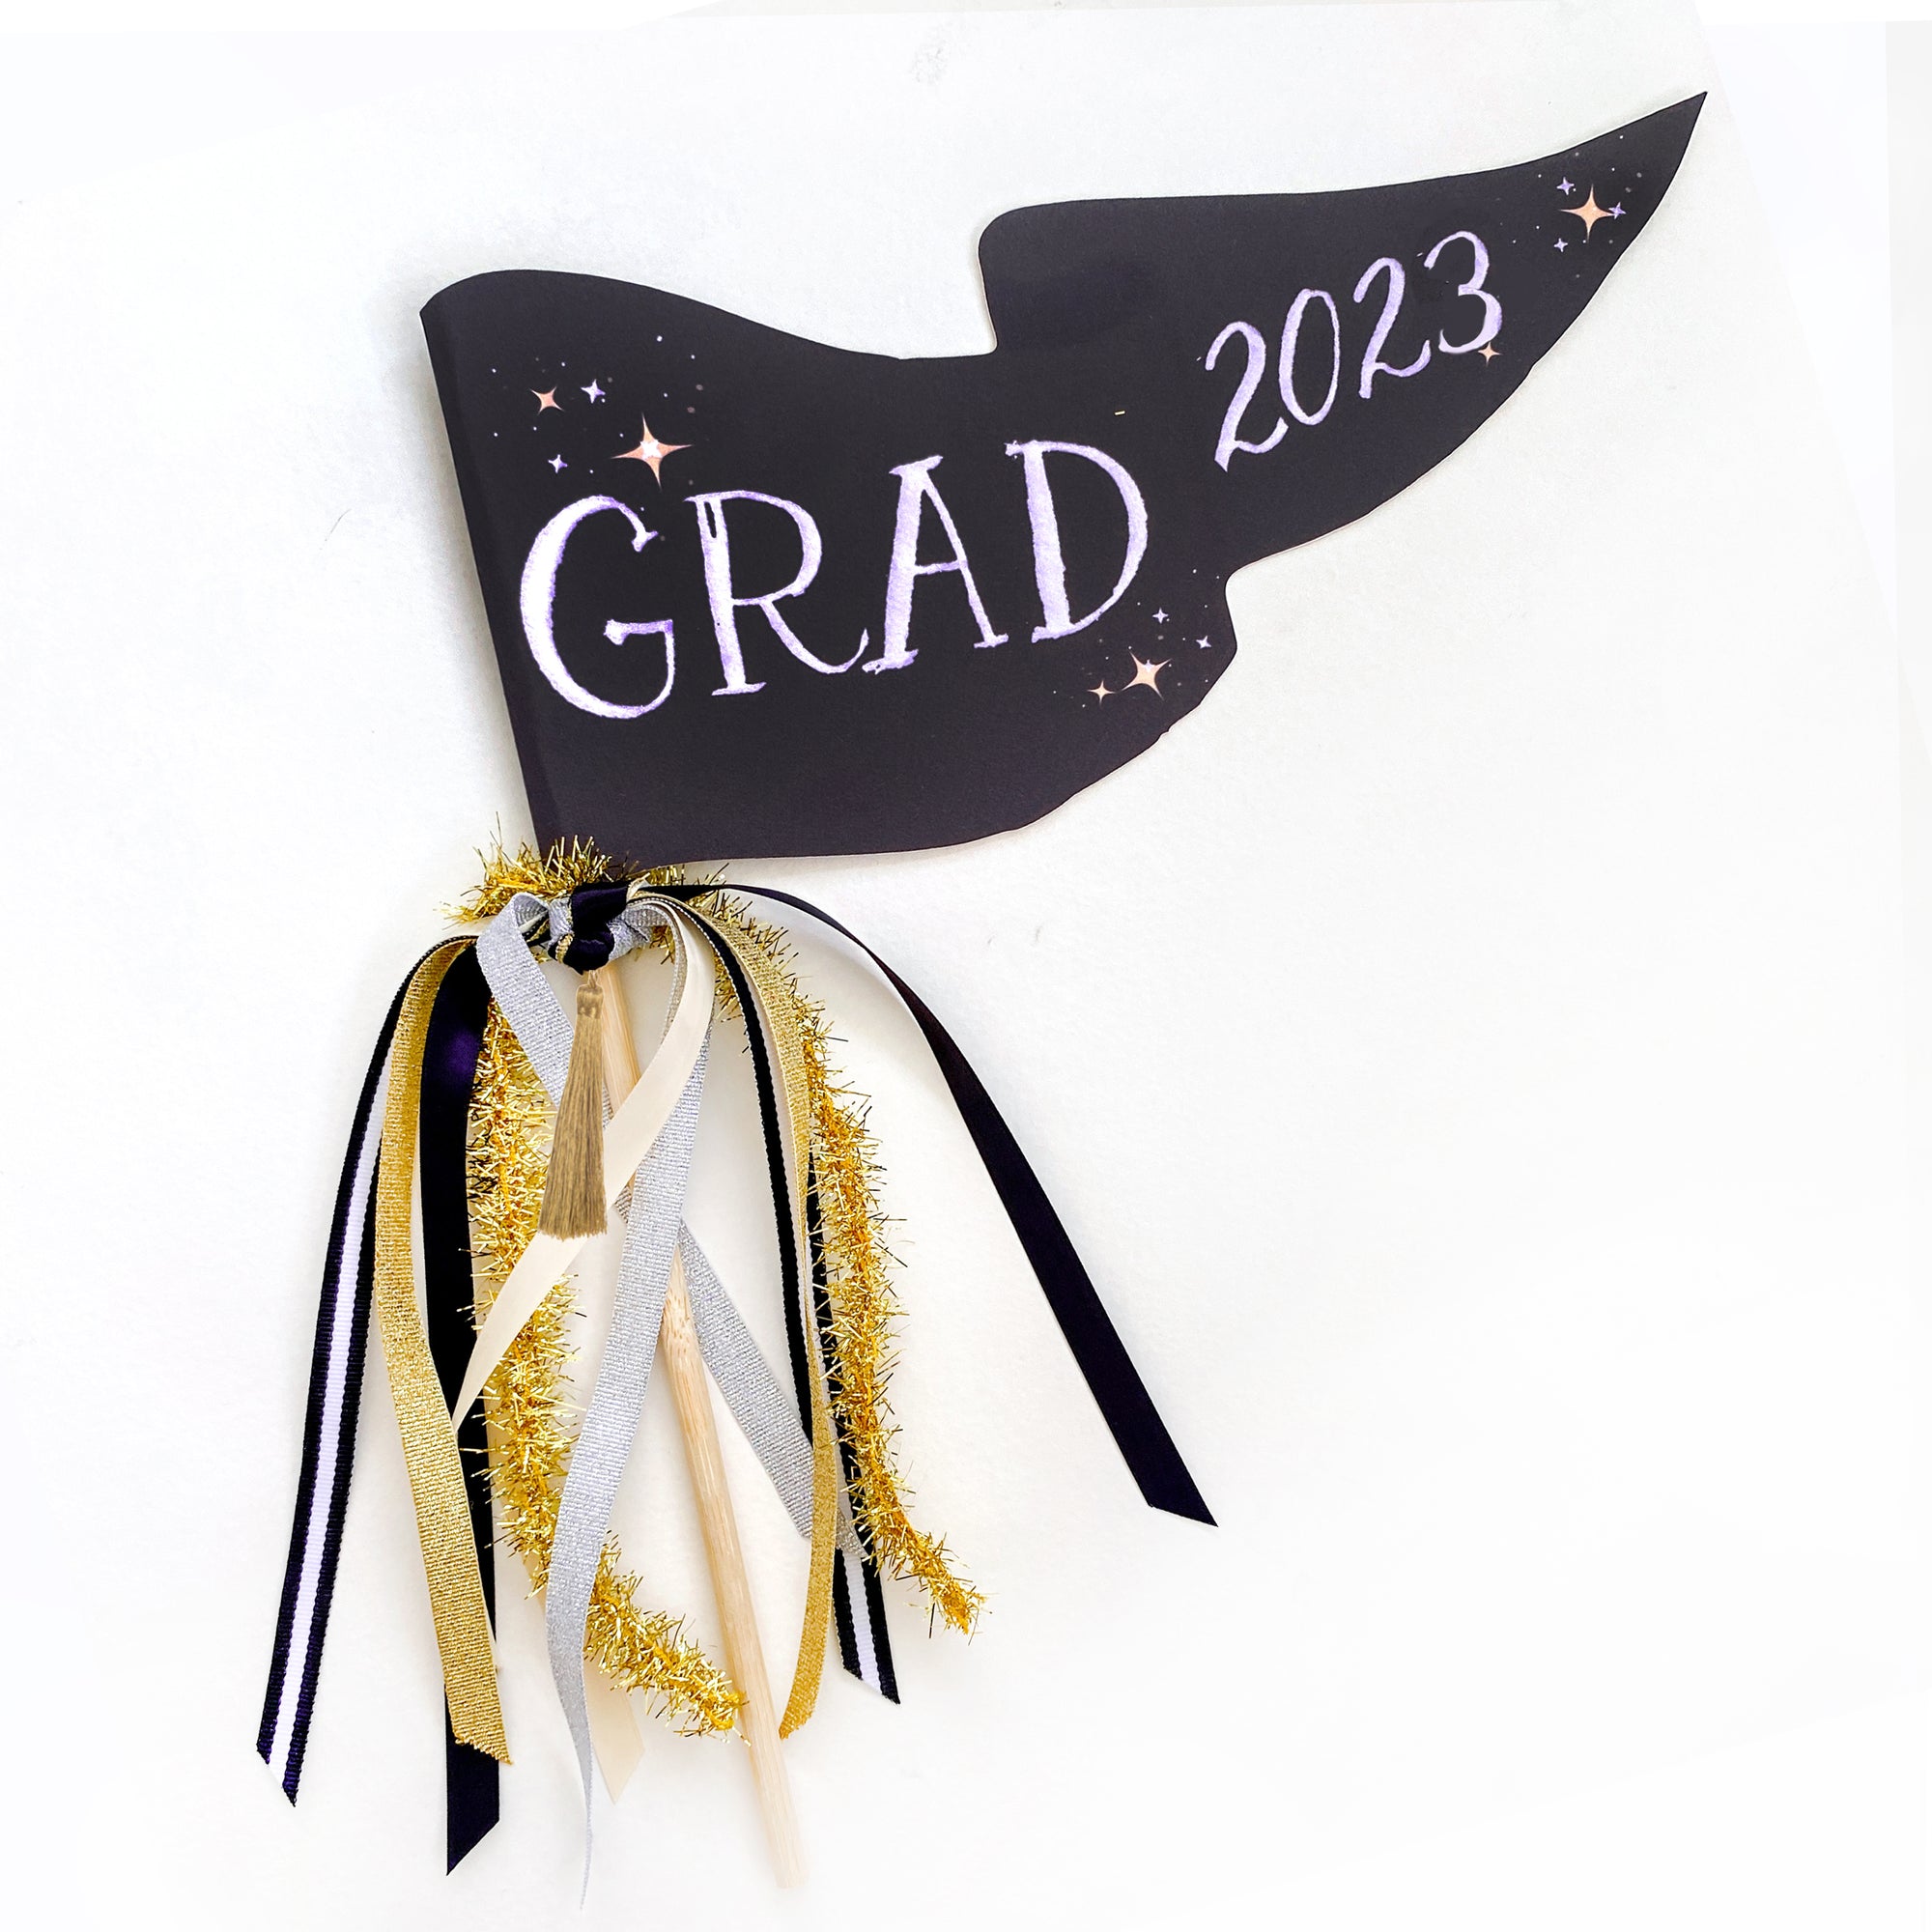 Grad 2023 Graduation Party Pennant